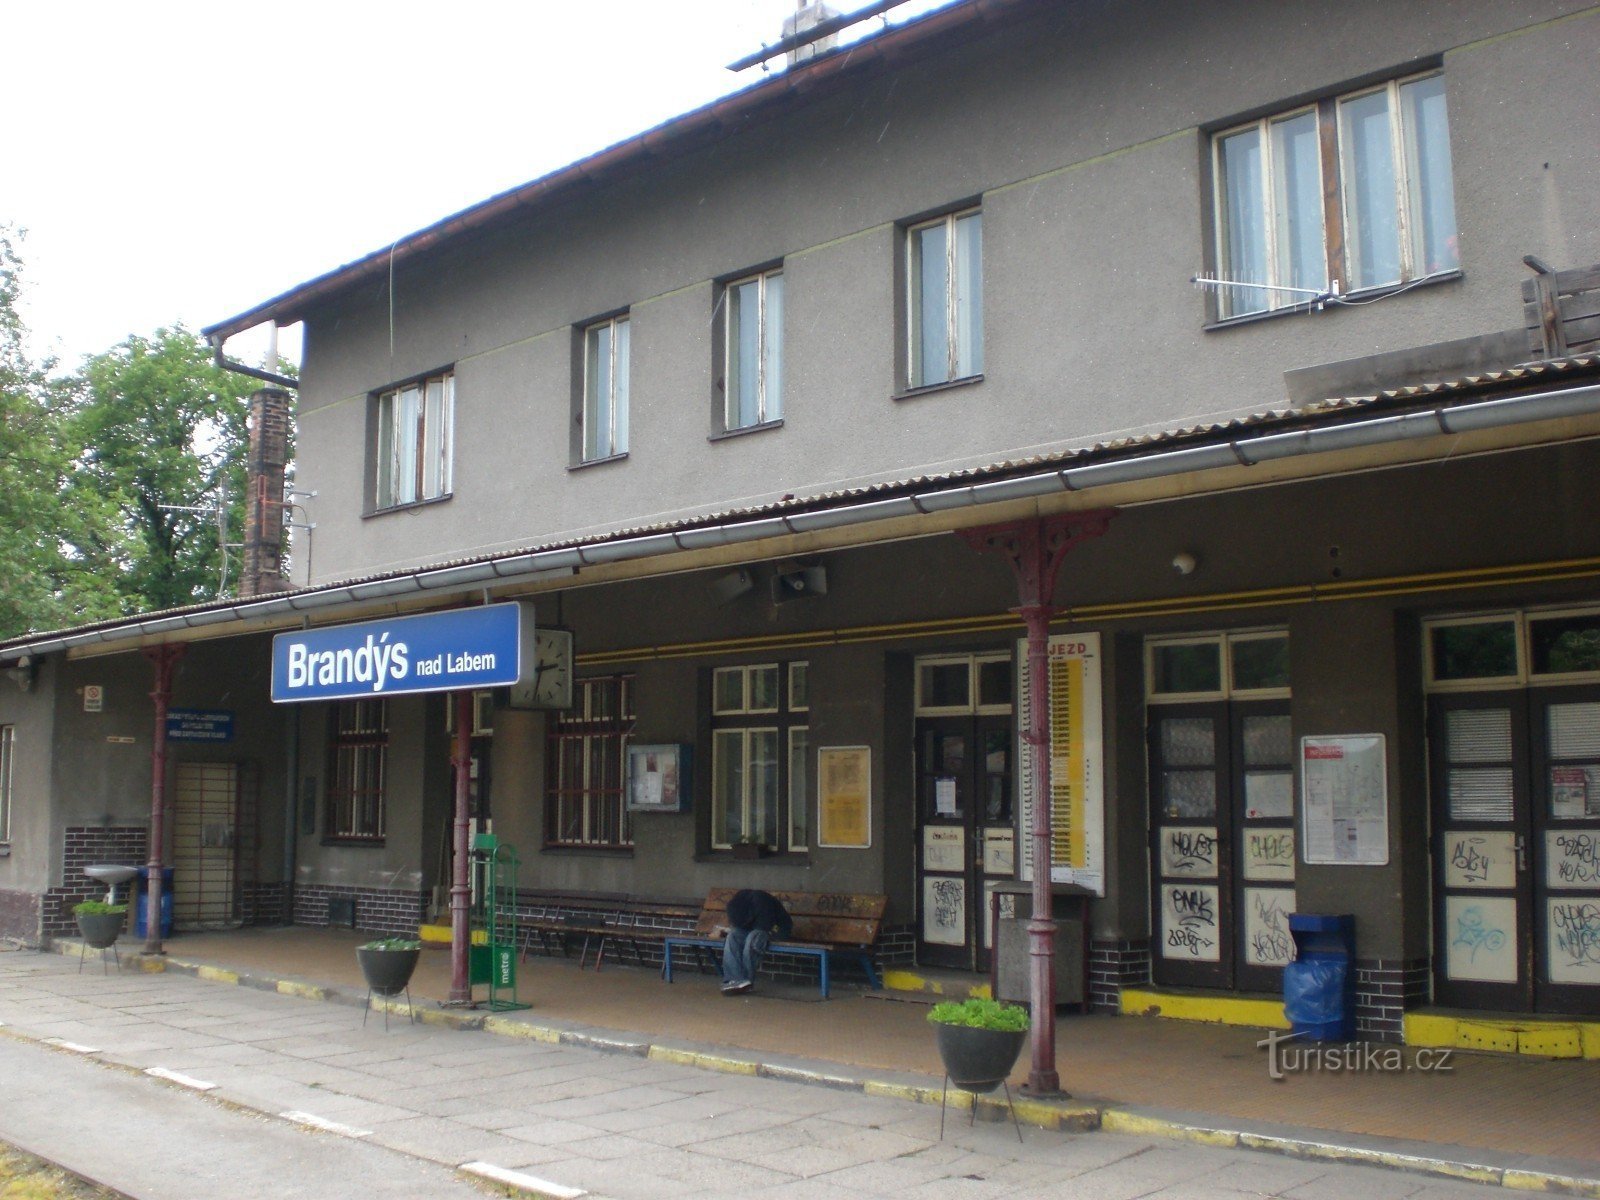 Brandýs nad Labem - railway station